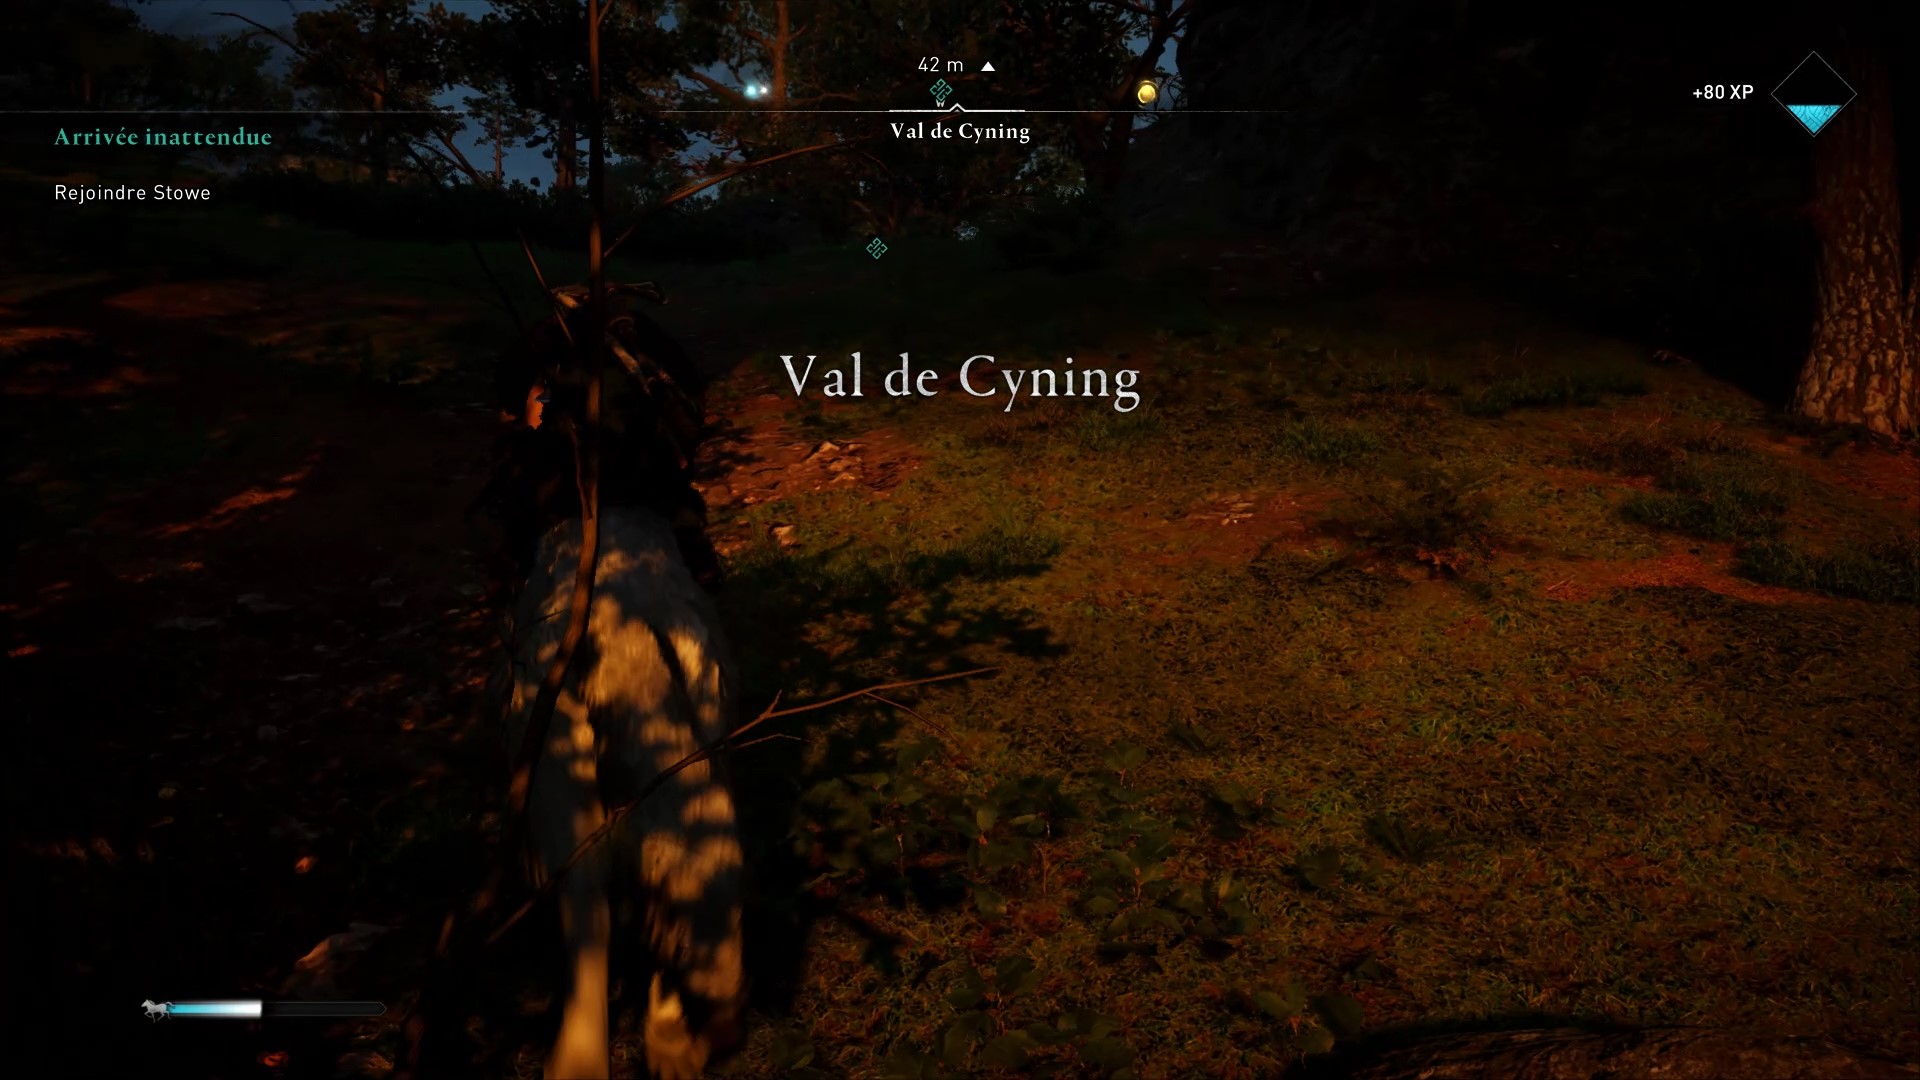 Arrivée inattendue Assassin's Creed Valhalla